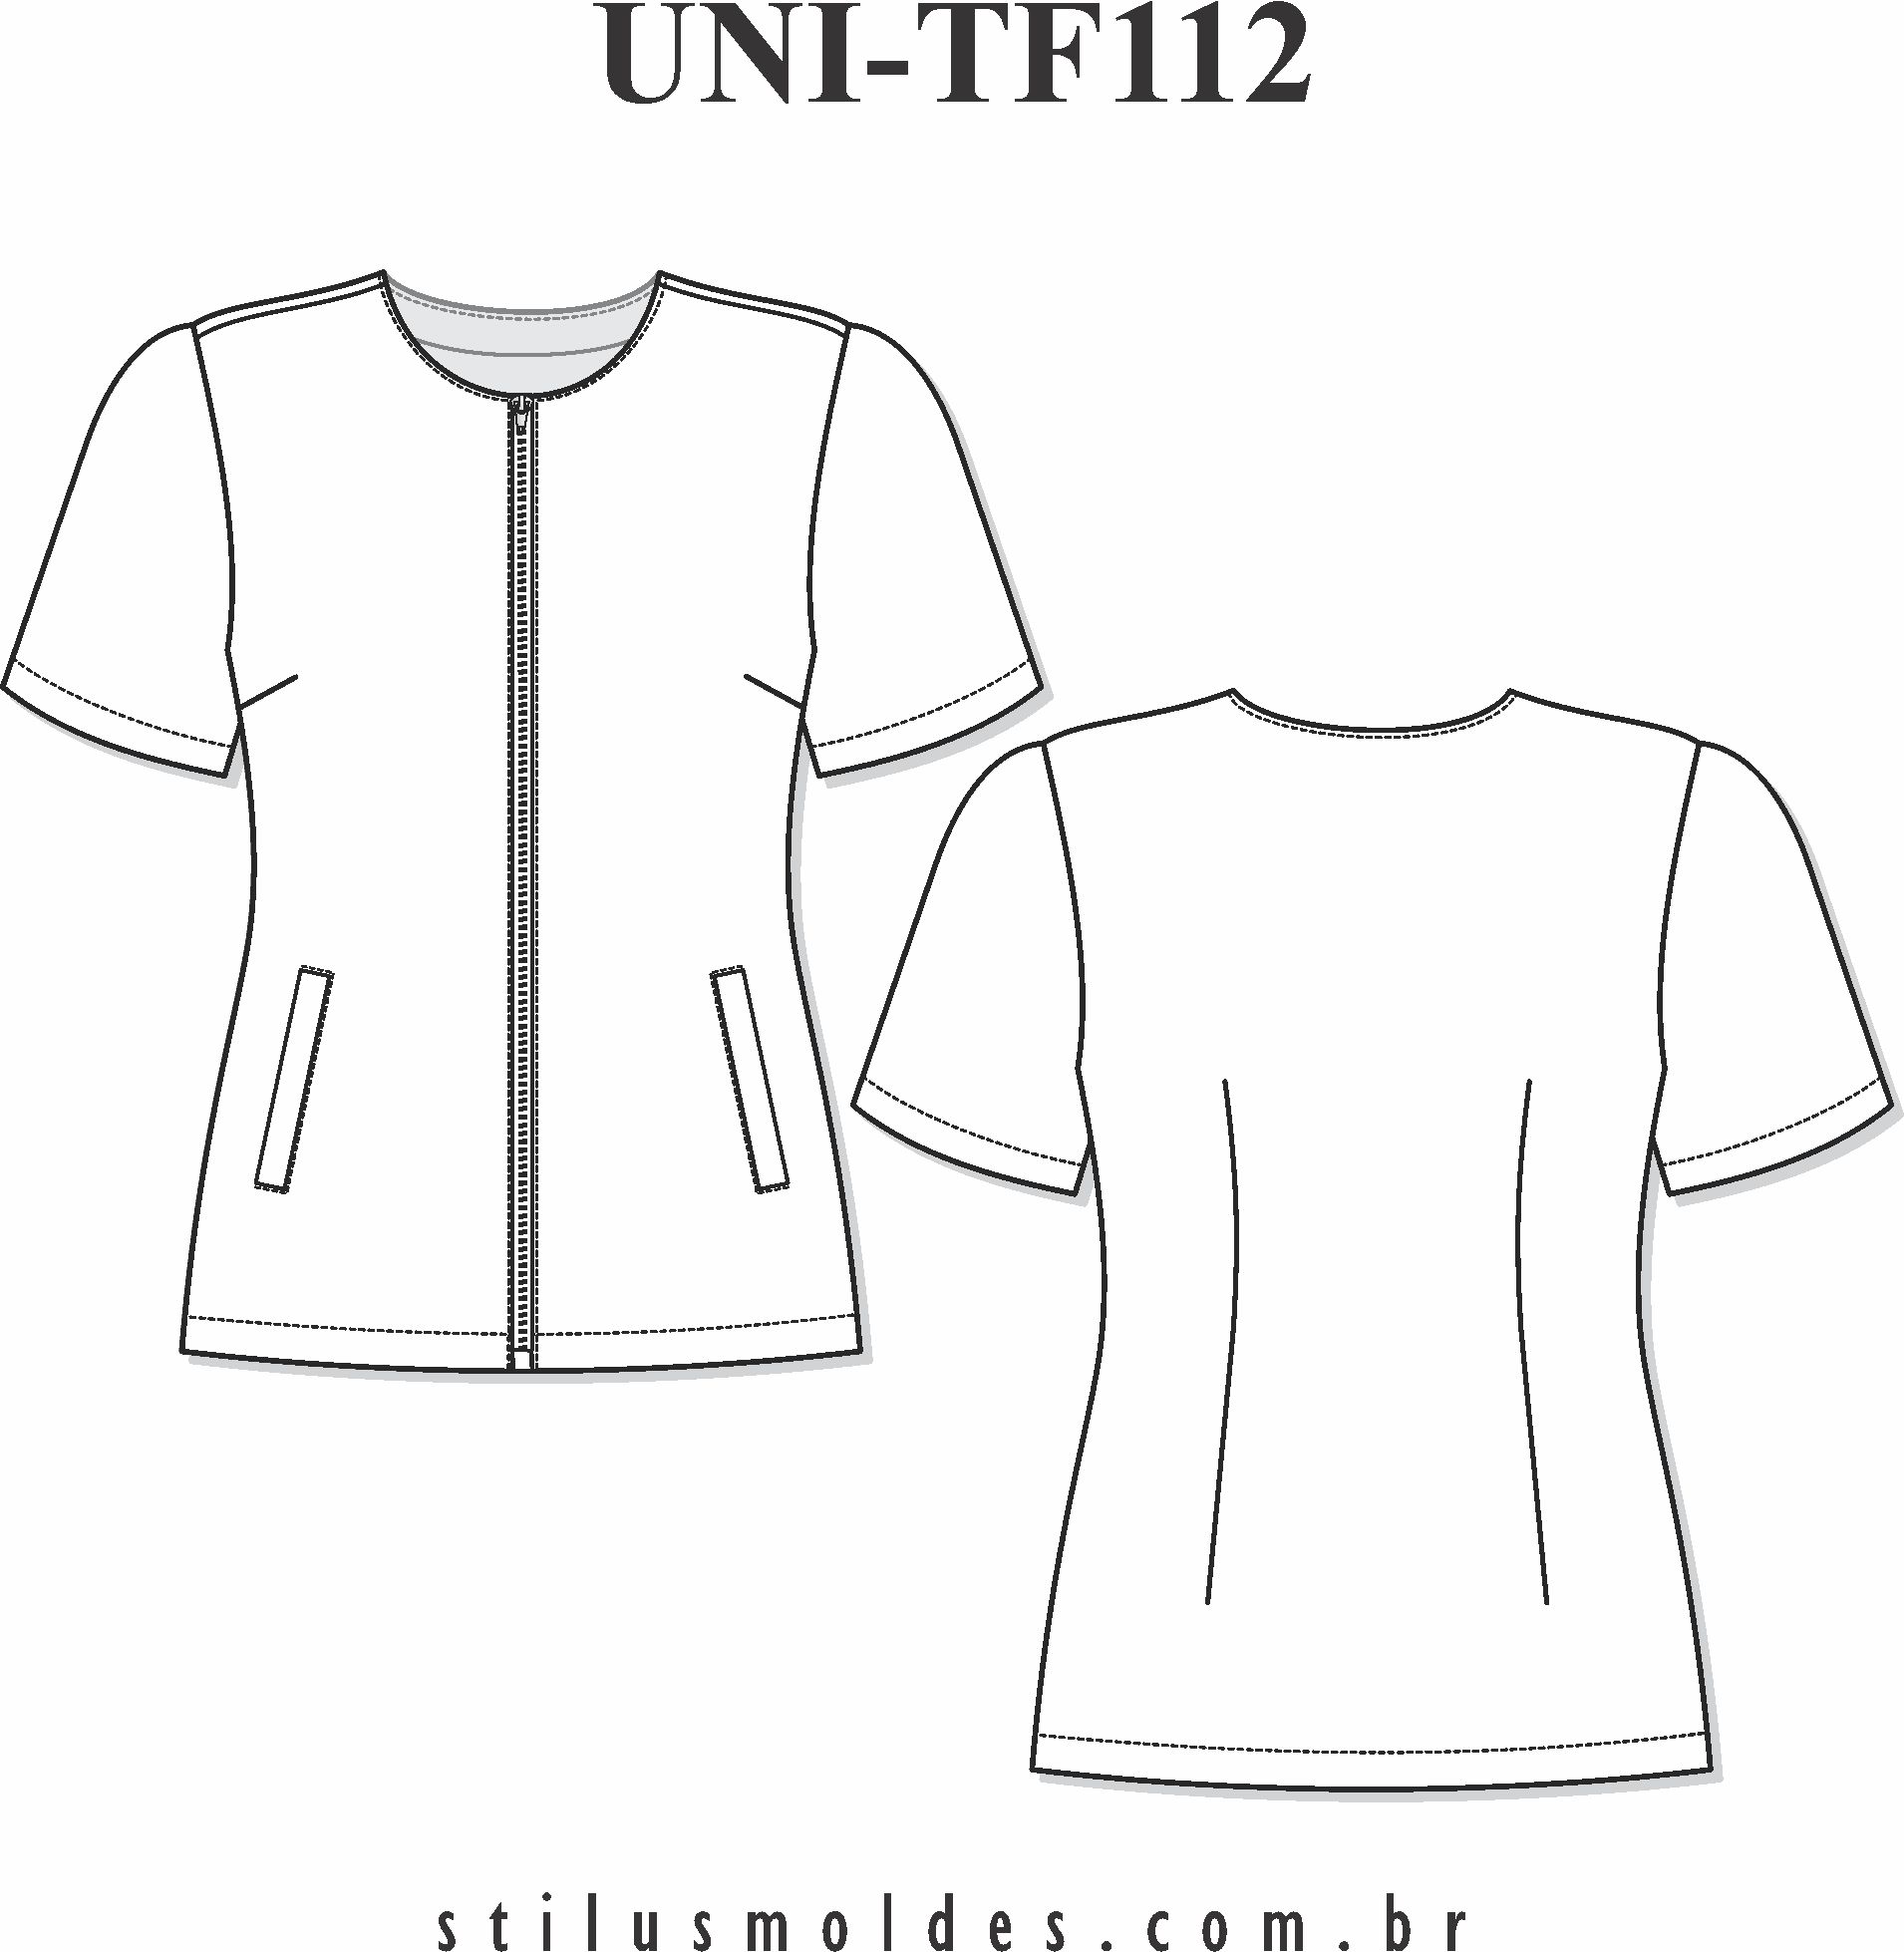 Blusa uniforme feminino (UNI-TF112) - Foto 0